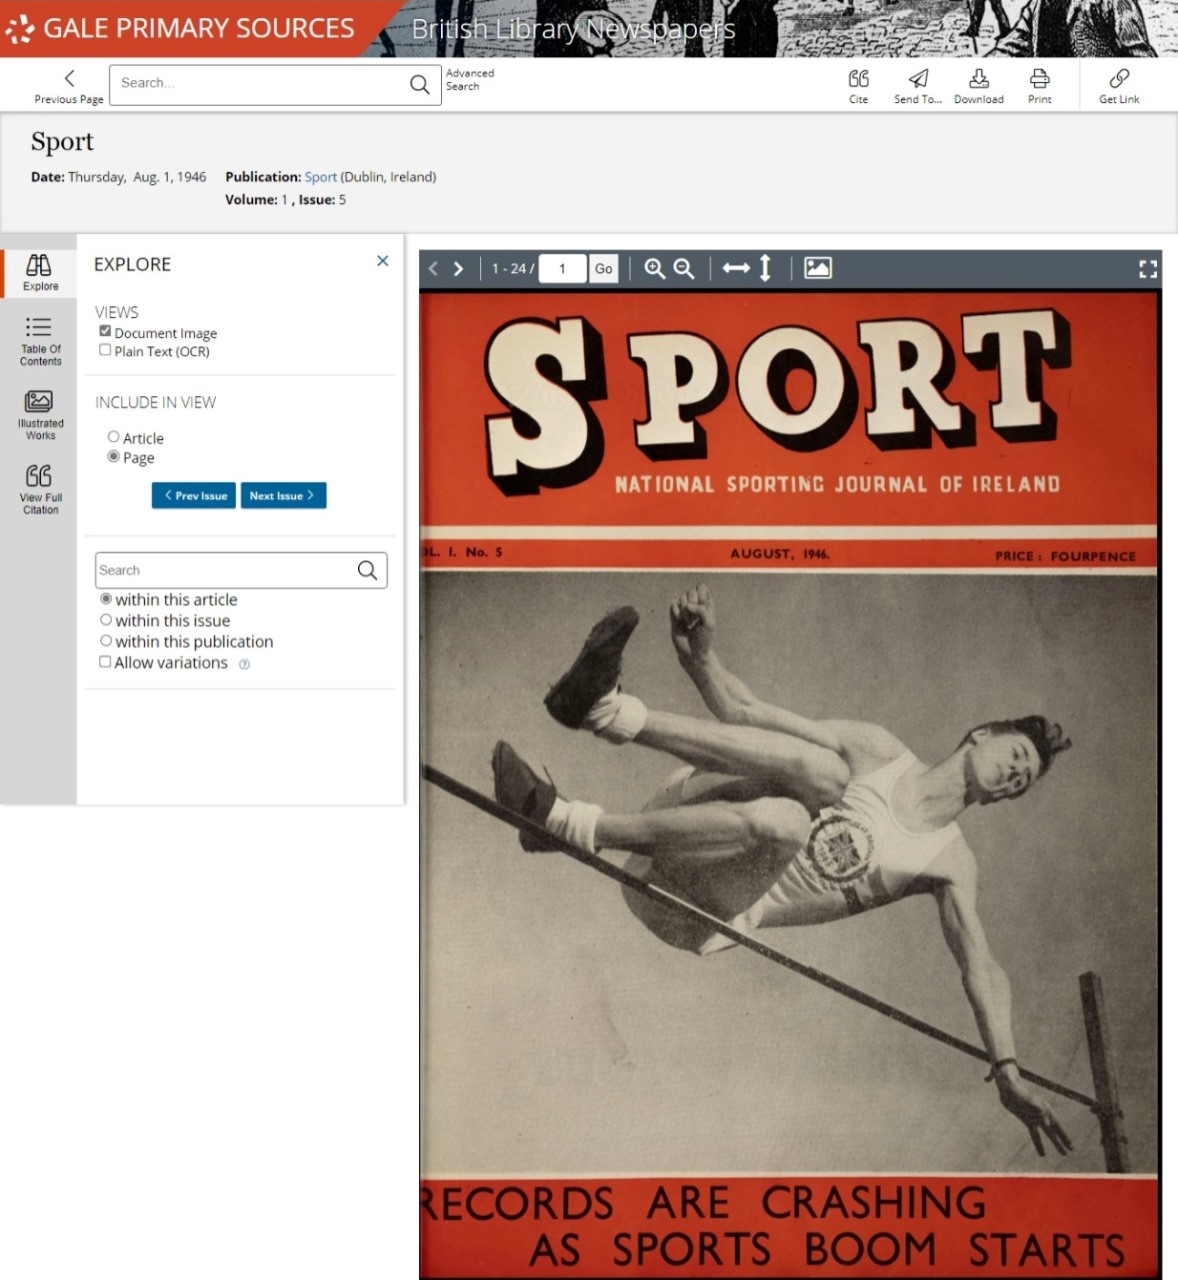 Sport, 1 Aug. 1946. British Library Newspapers Part VI: Ireland, 1783-1950